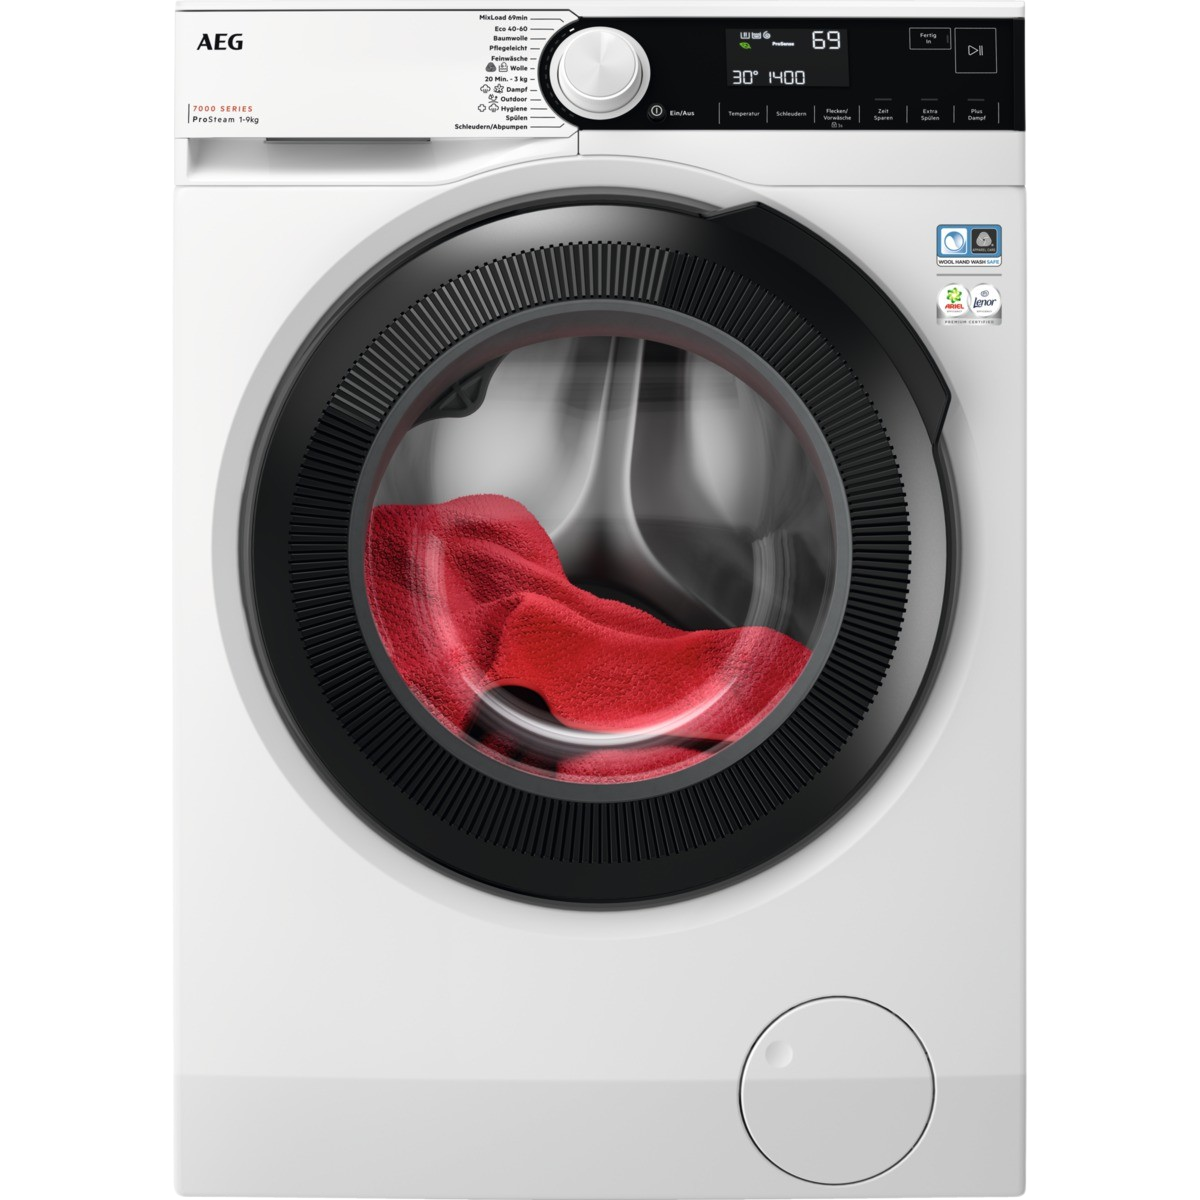 month Siemens Washing Rent Machine per iQ500 €34.90 WG44G2040 from